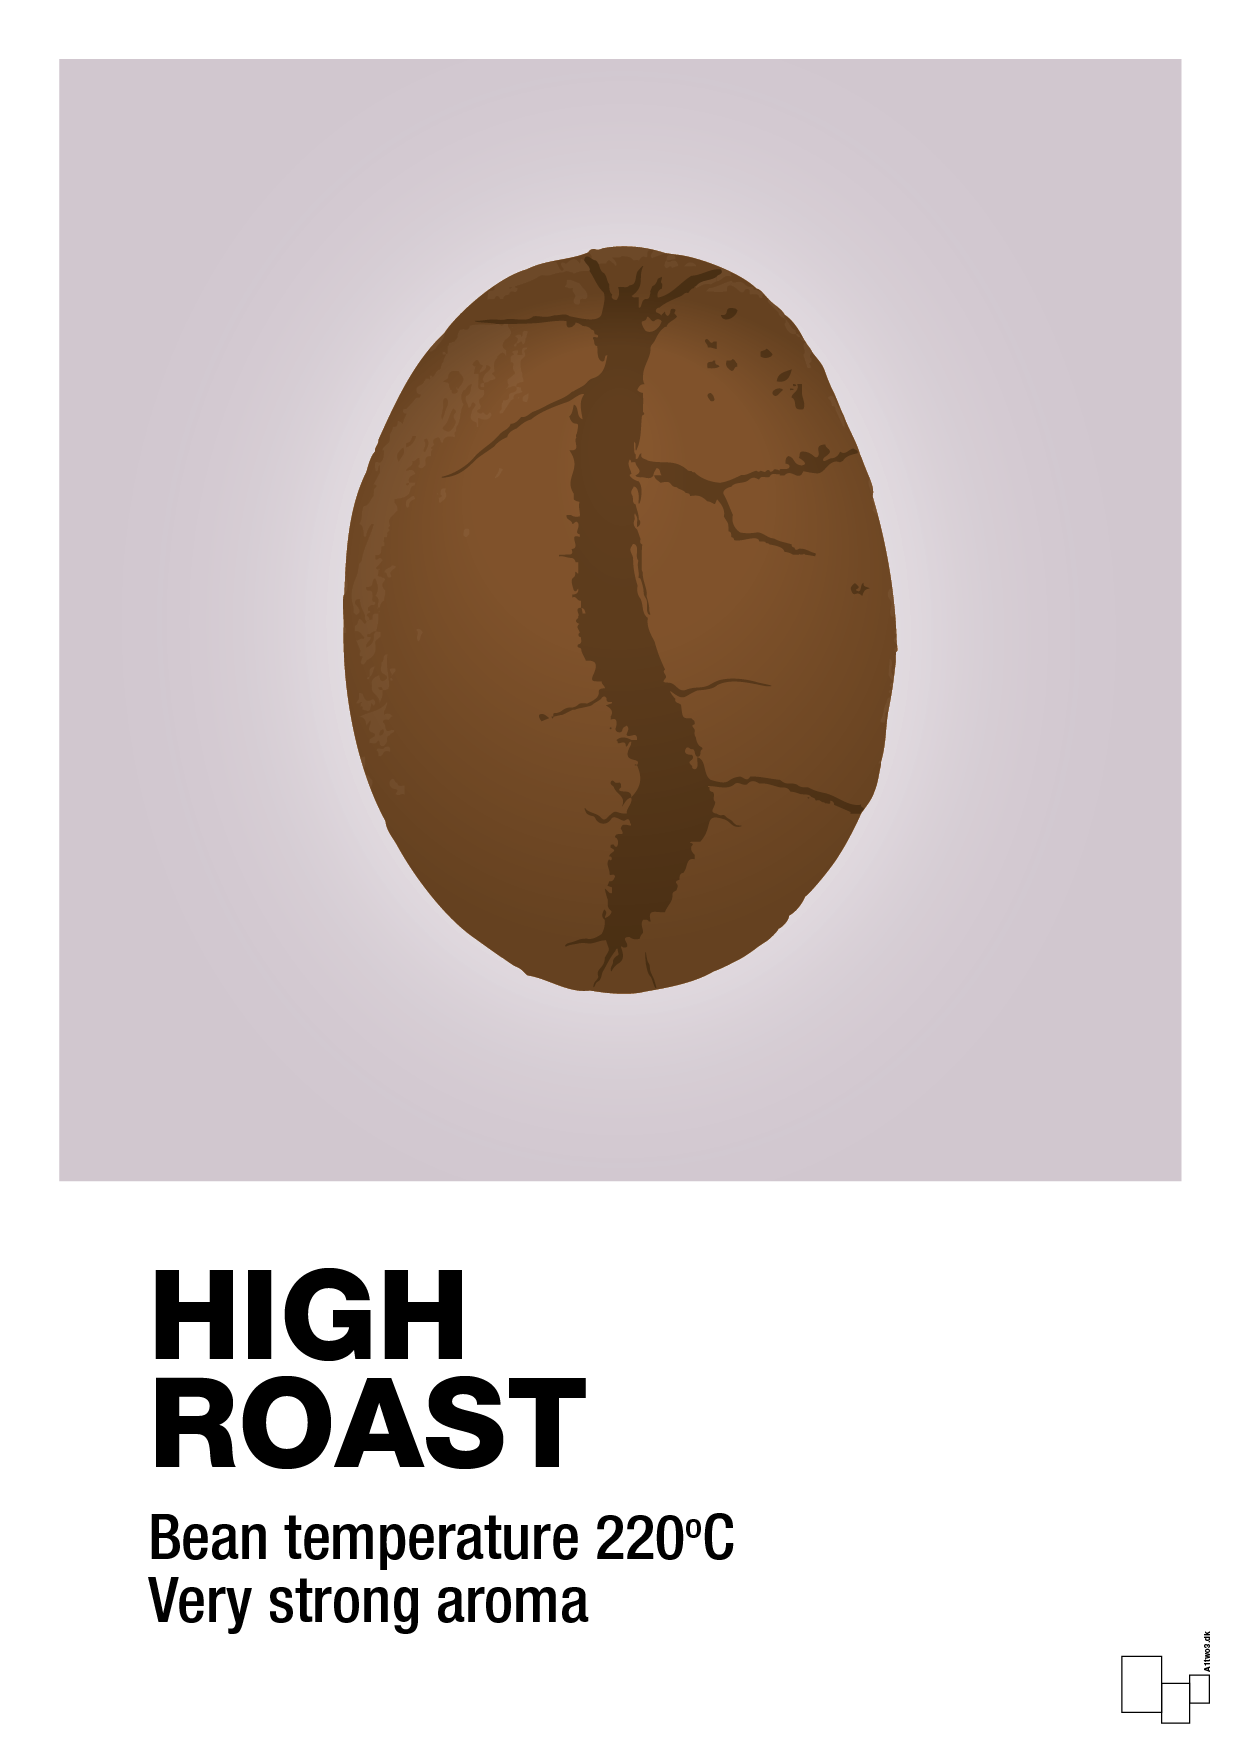 high roast - Plakat med Mad & Drikke i Dusty Lilac